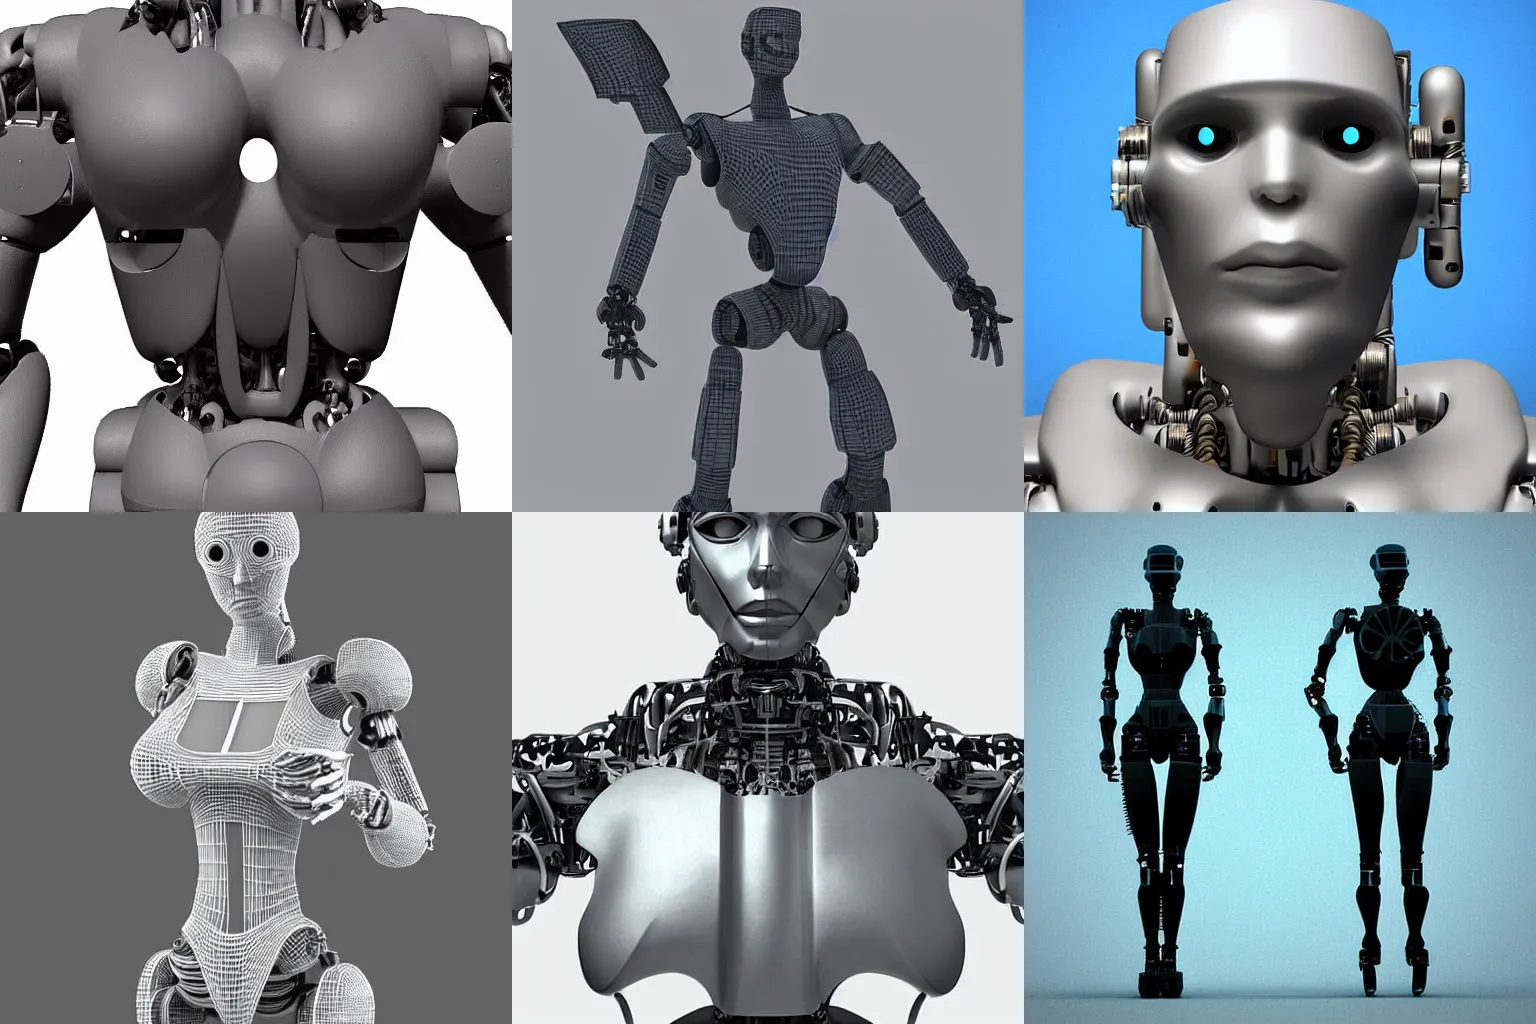 Prompt: a digital 3d sculpture of a cyborg robot, digital art